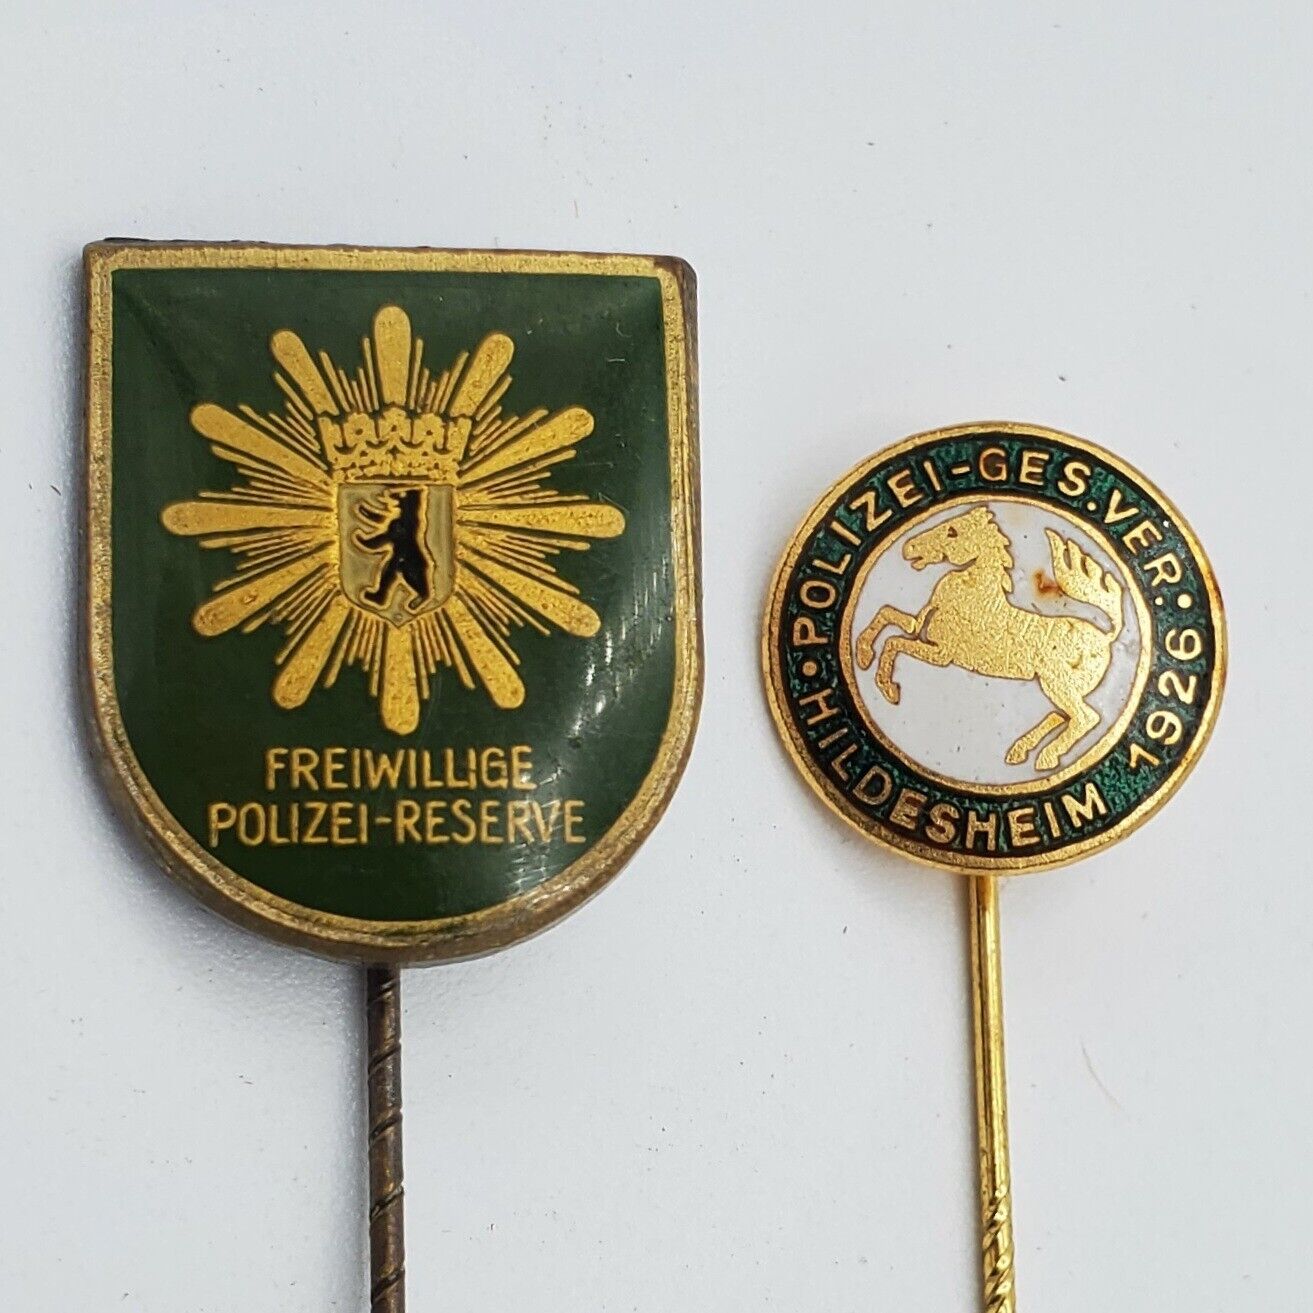 German police Antique Berlin Stick Pin badge button volunteer reserve set old